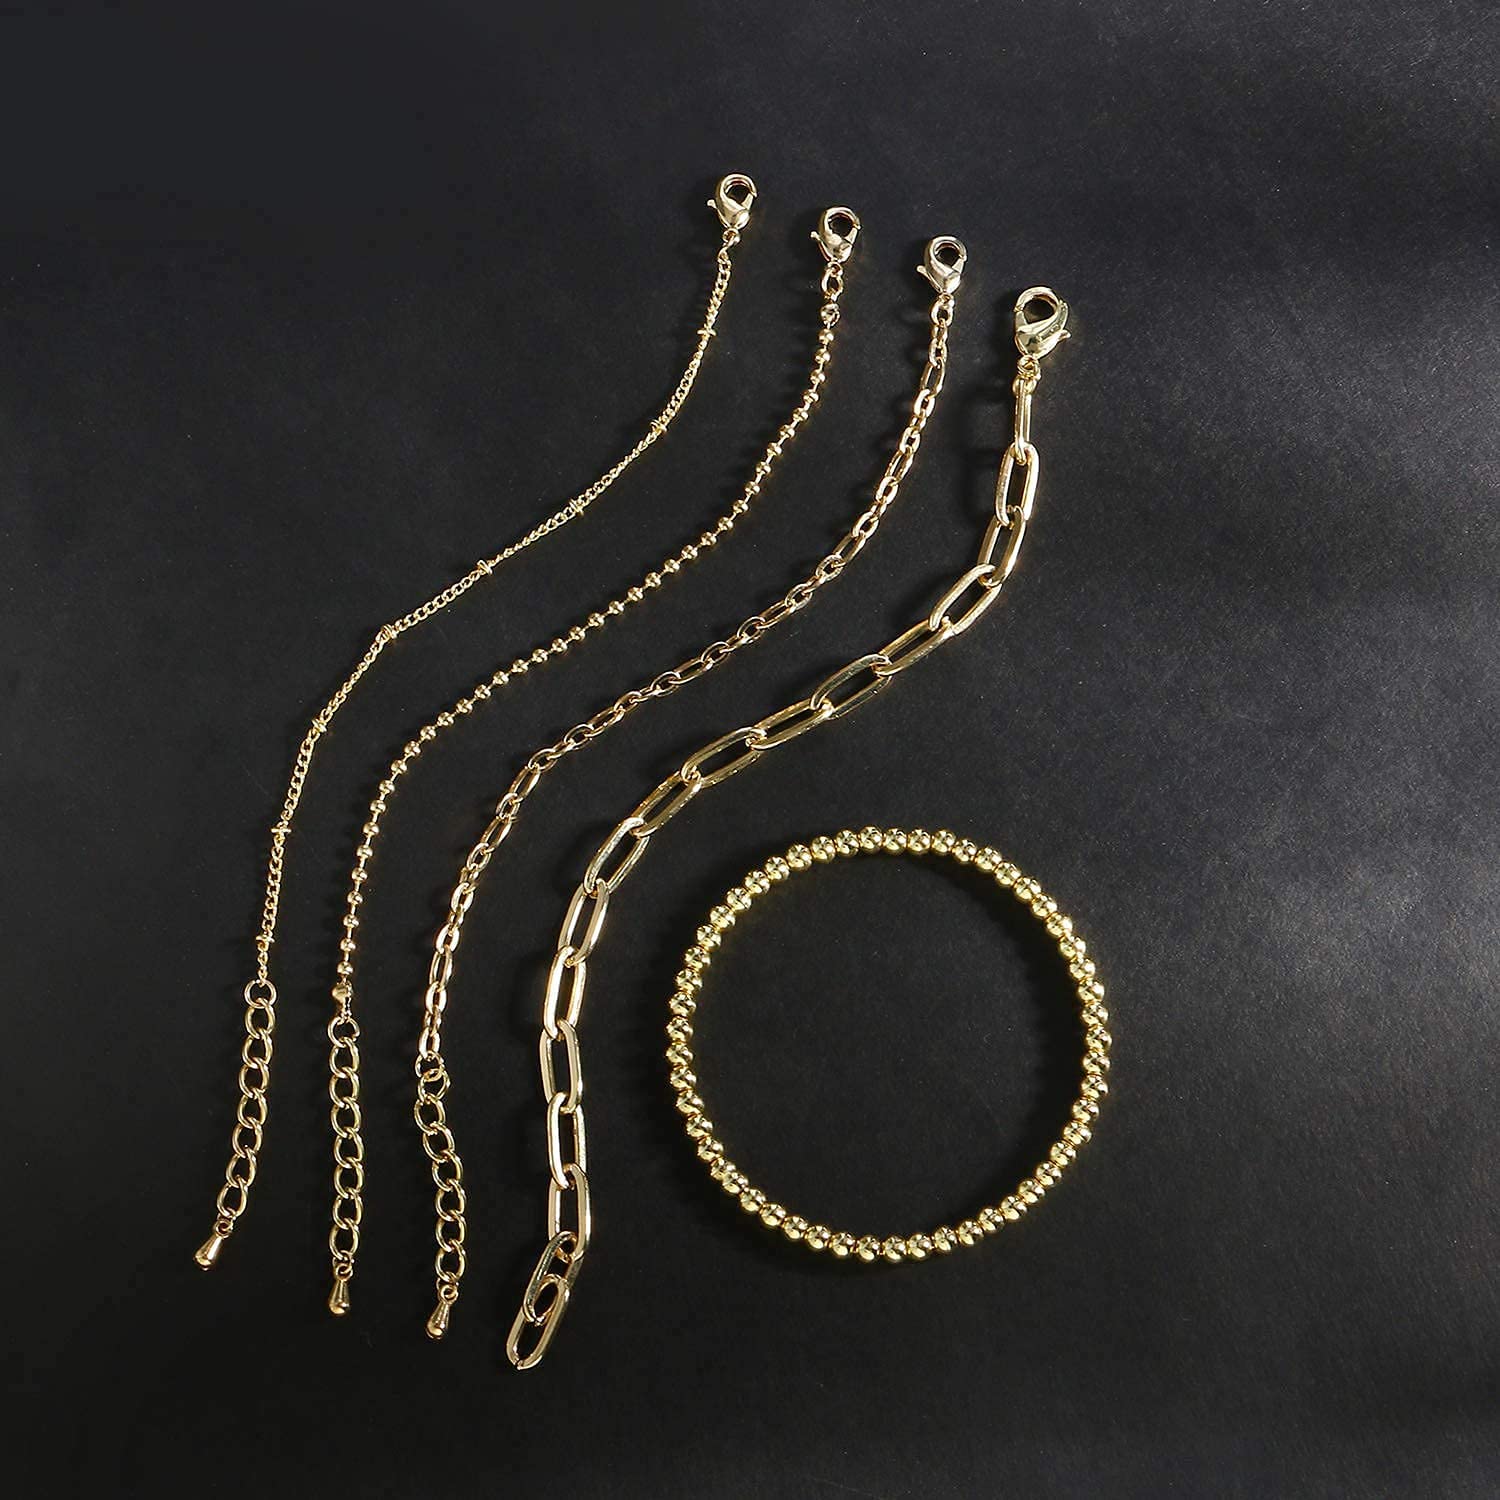 CONRAN KREMIX Gold Chain Bracelet Sets for Women Girls 14K Gold Plated Dainty Link Paperclip Bracelets Stake Adjustable Layered Metal Link Bracelet Set Fashion Jewelry